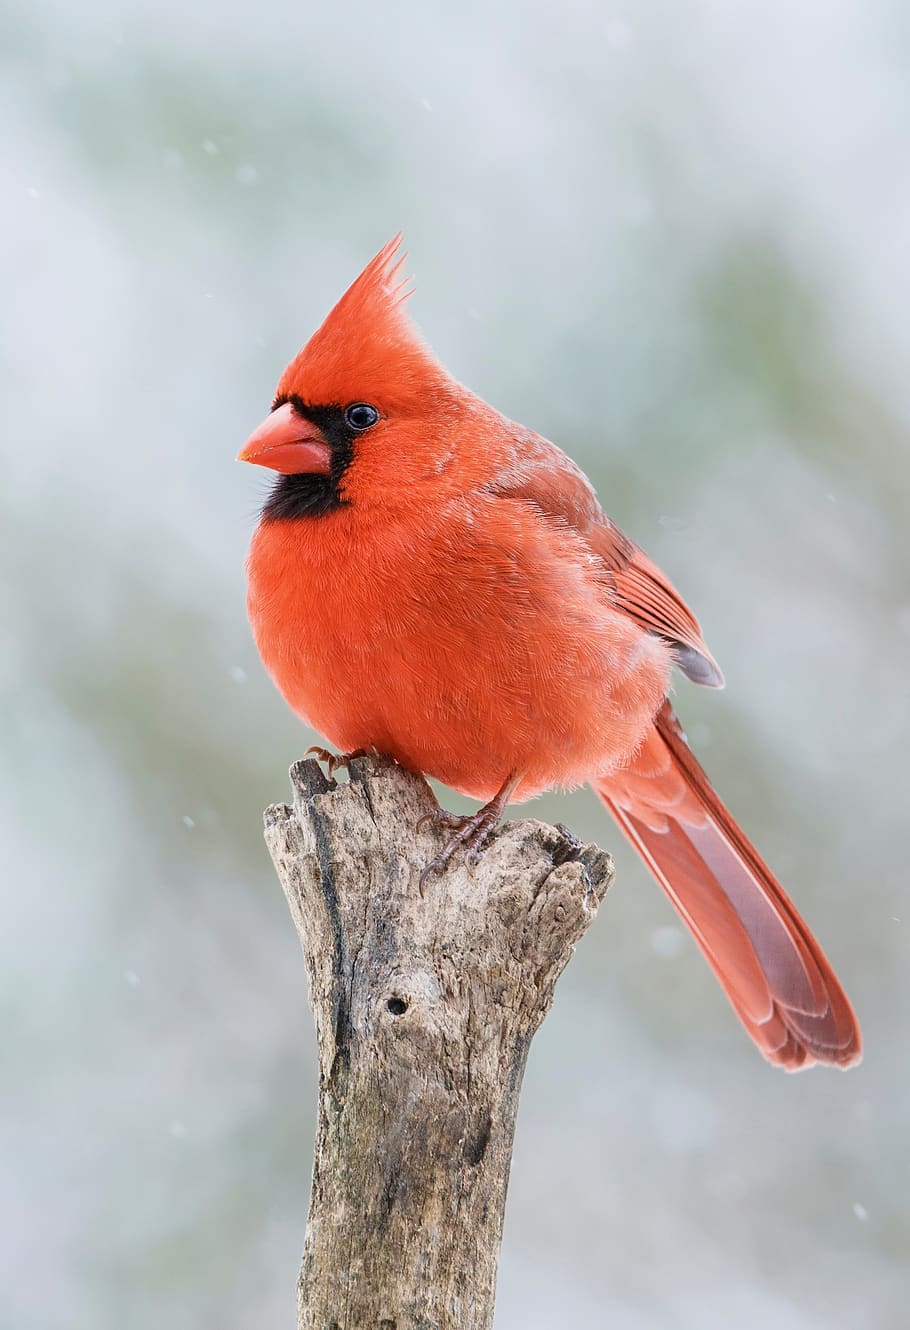 kardinal, laki-laki, redbird, margasatwa, burung, duduk, bulu, pagar, lewis, songbird